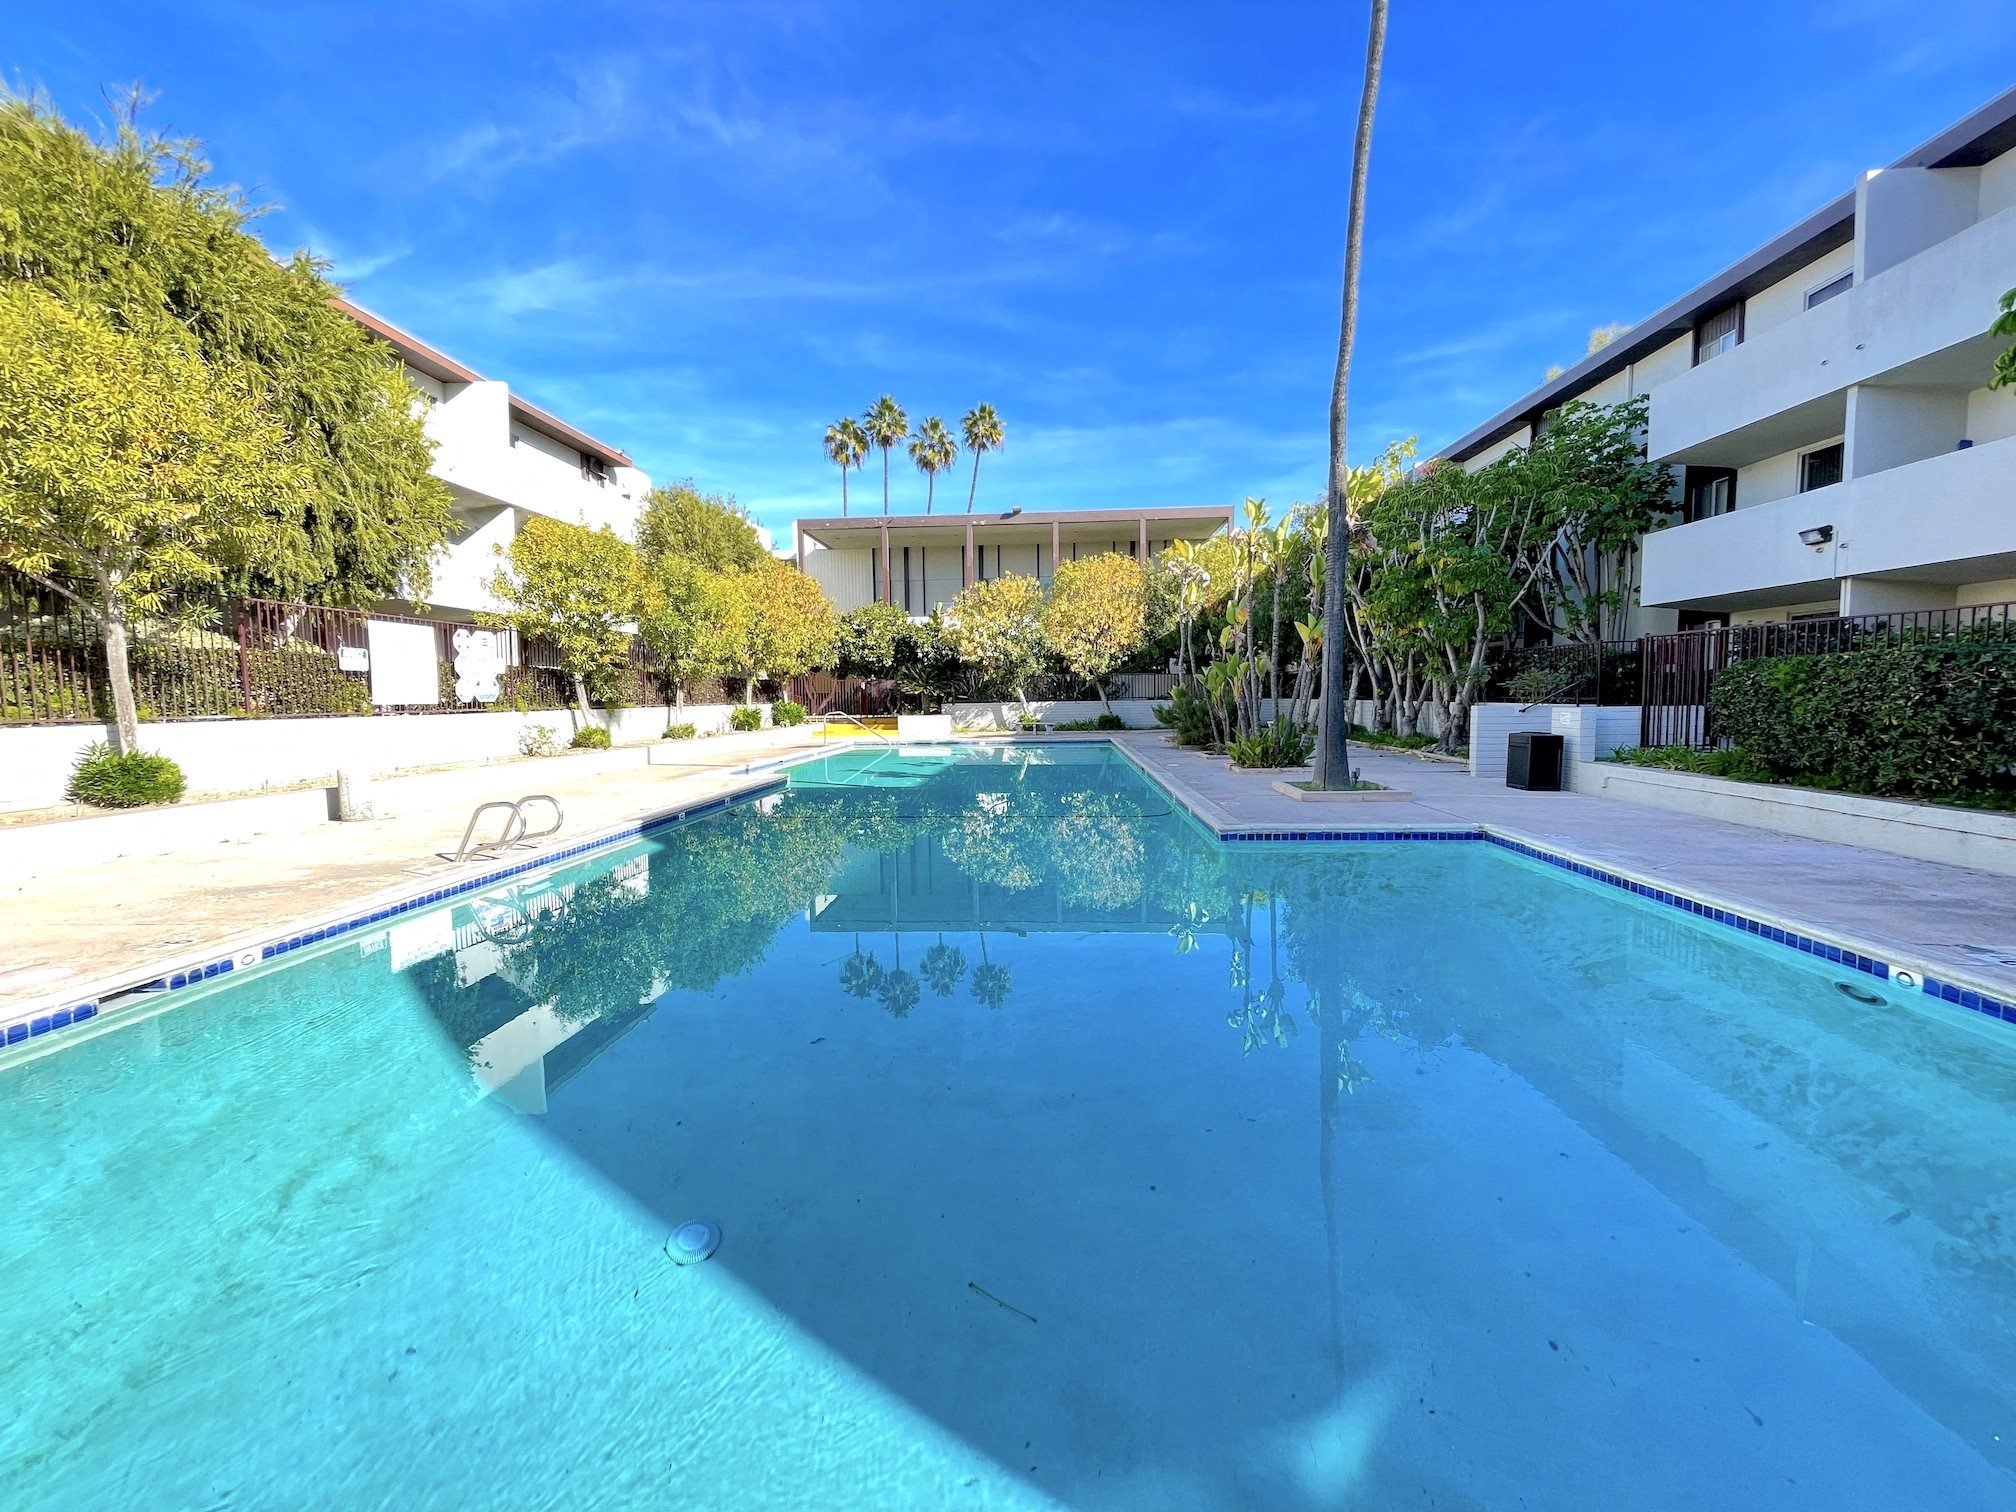 Paradise Gardens Apartment Homes Apartments In Long Beach